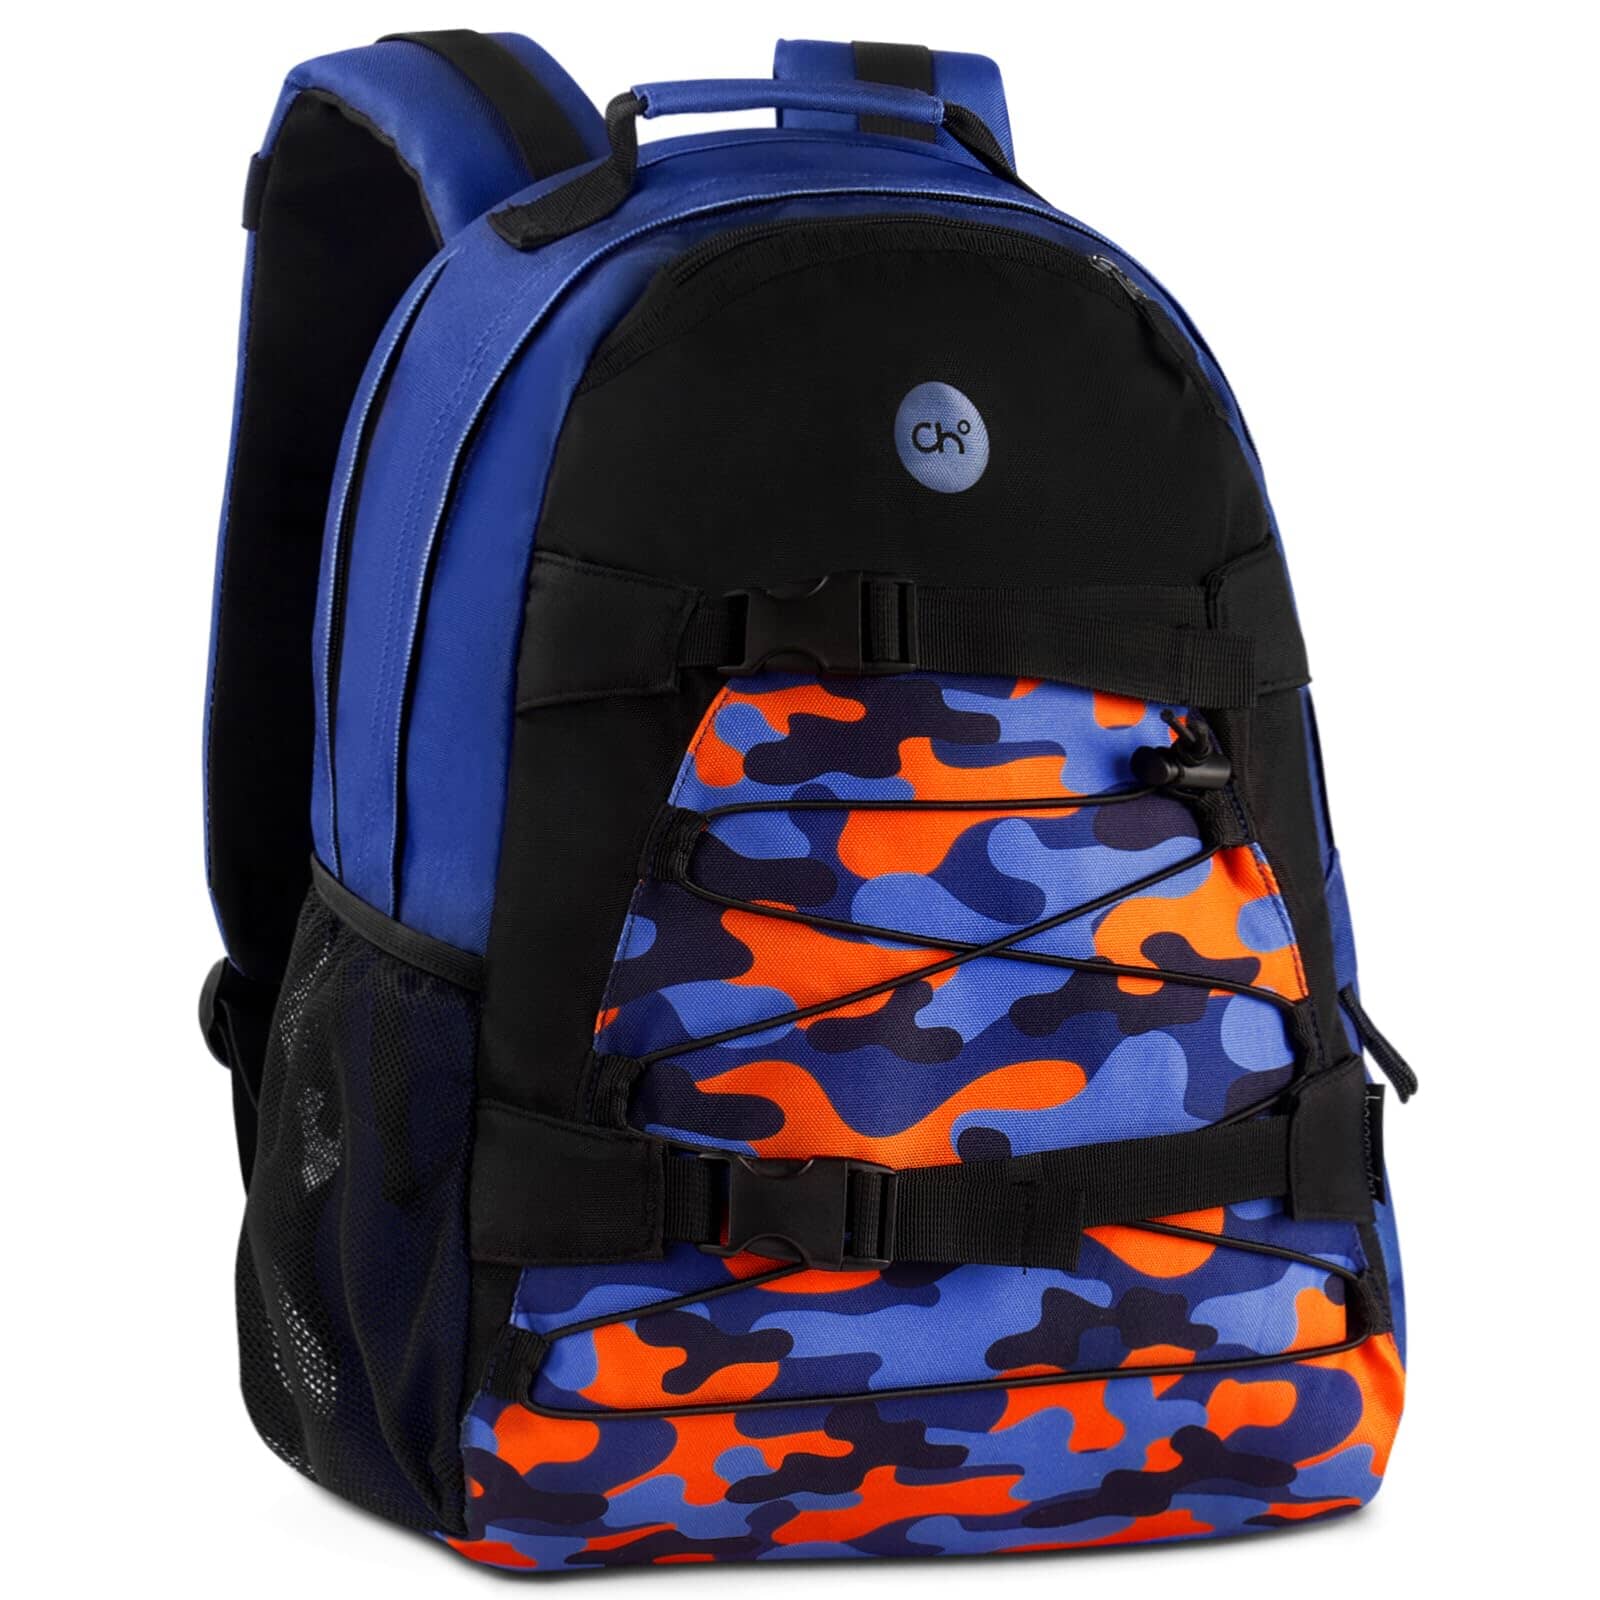 Choco Mocha Boys Orange Camo Backpack for Elementary Middle School, Large Backpack for Kids Teen Boys, 18 Inch chocomochakids 